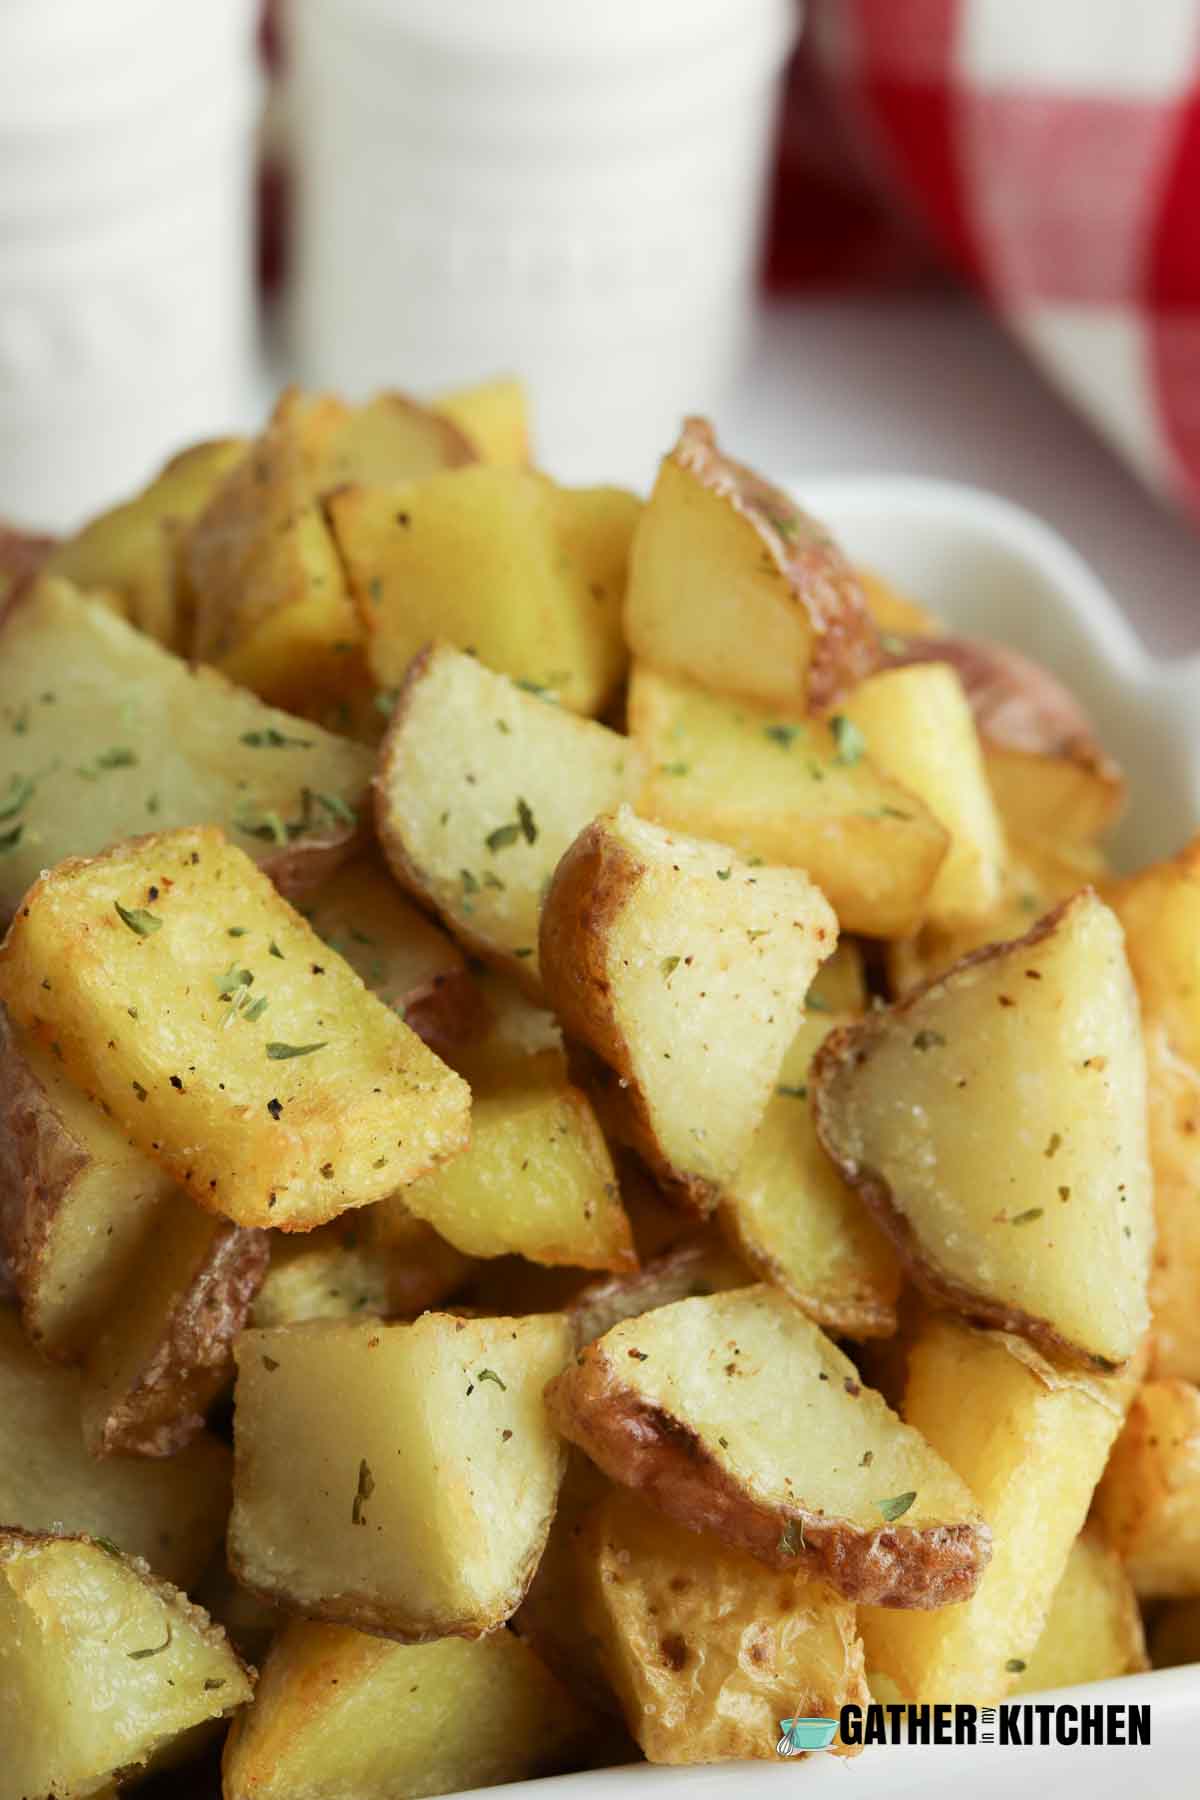 Closeup of fried potato pieces.